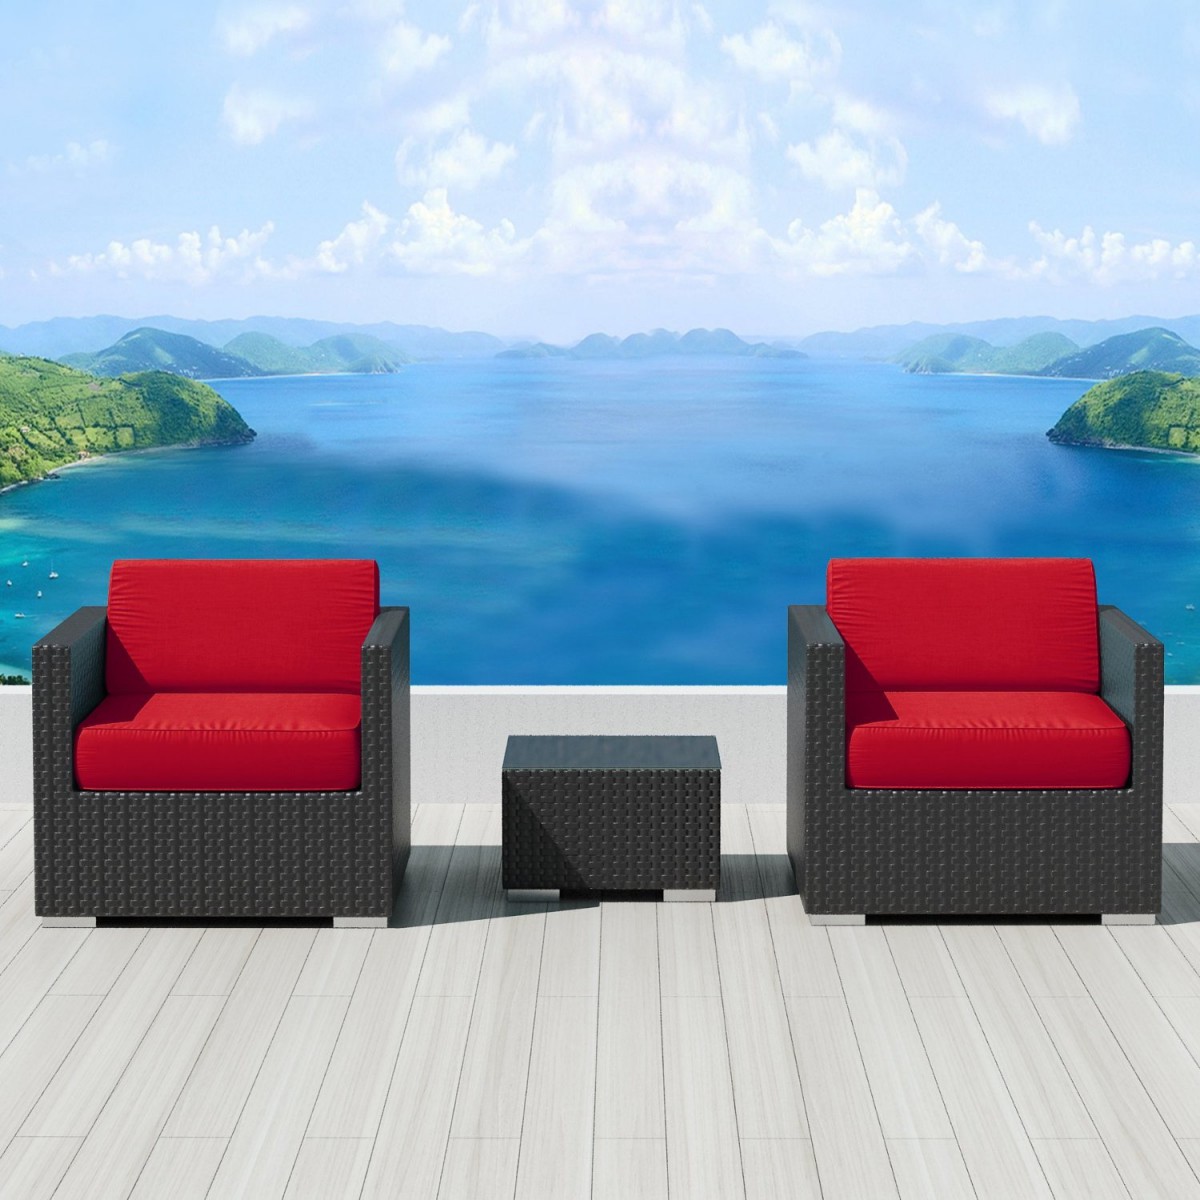 Luxxella Bistro 3pc Sunbrella Outdoor Sectional Sofa Set